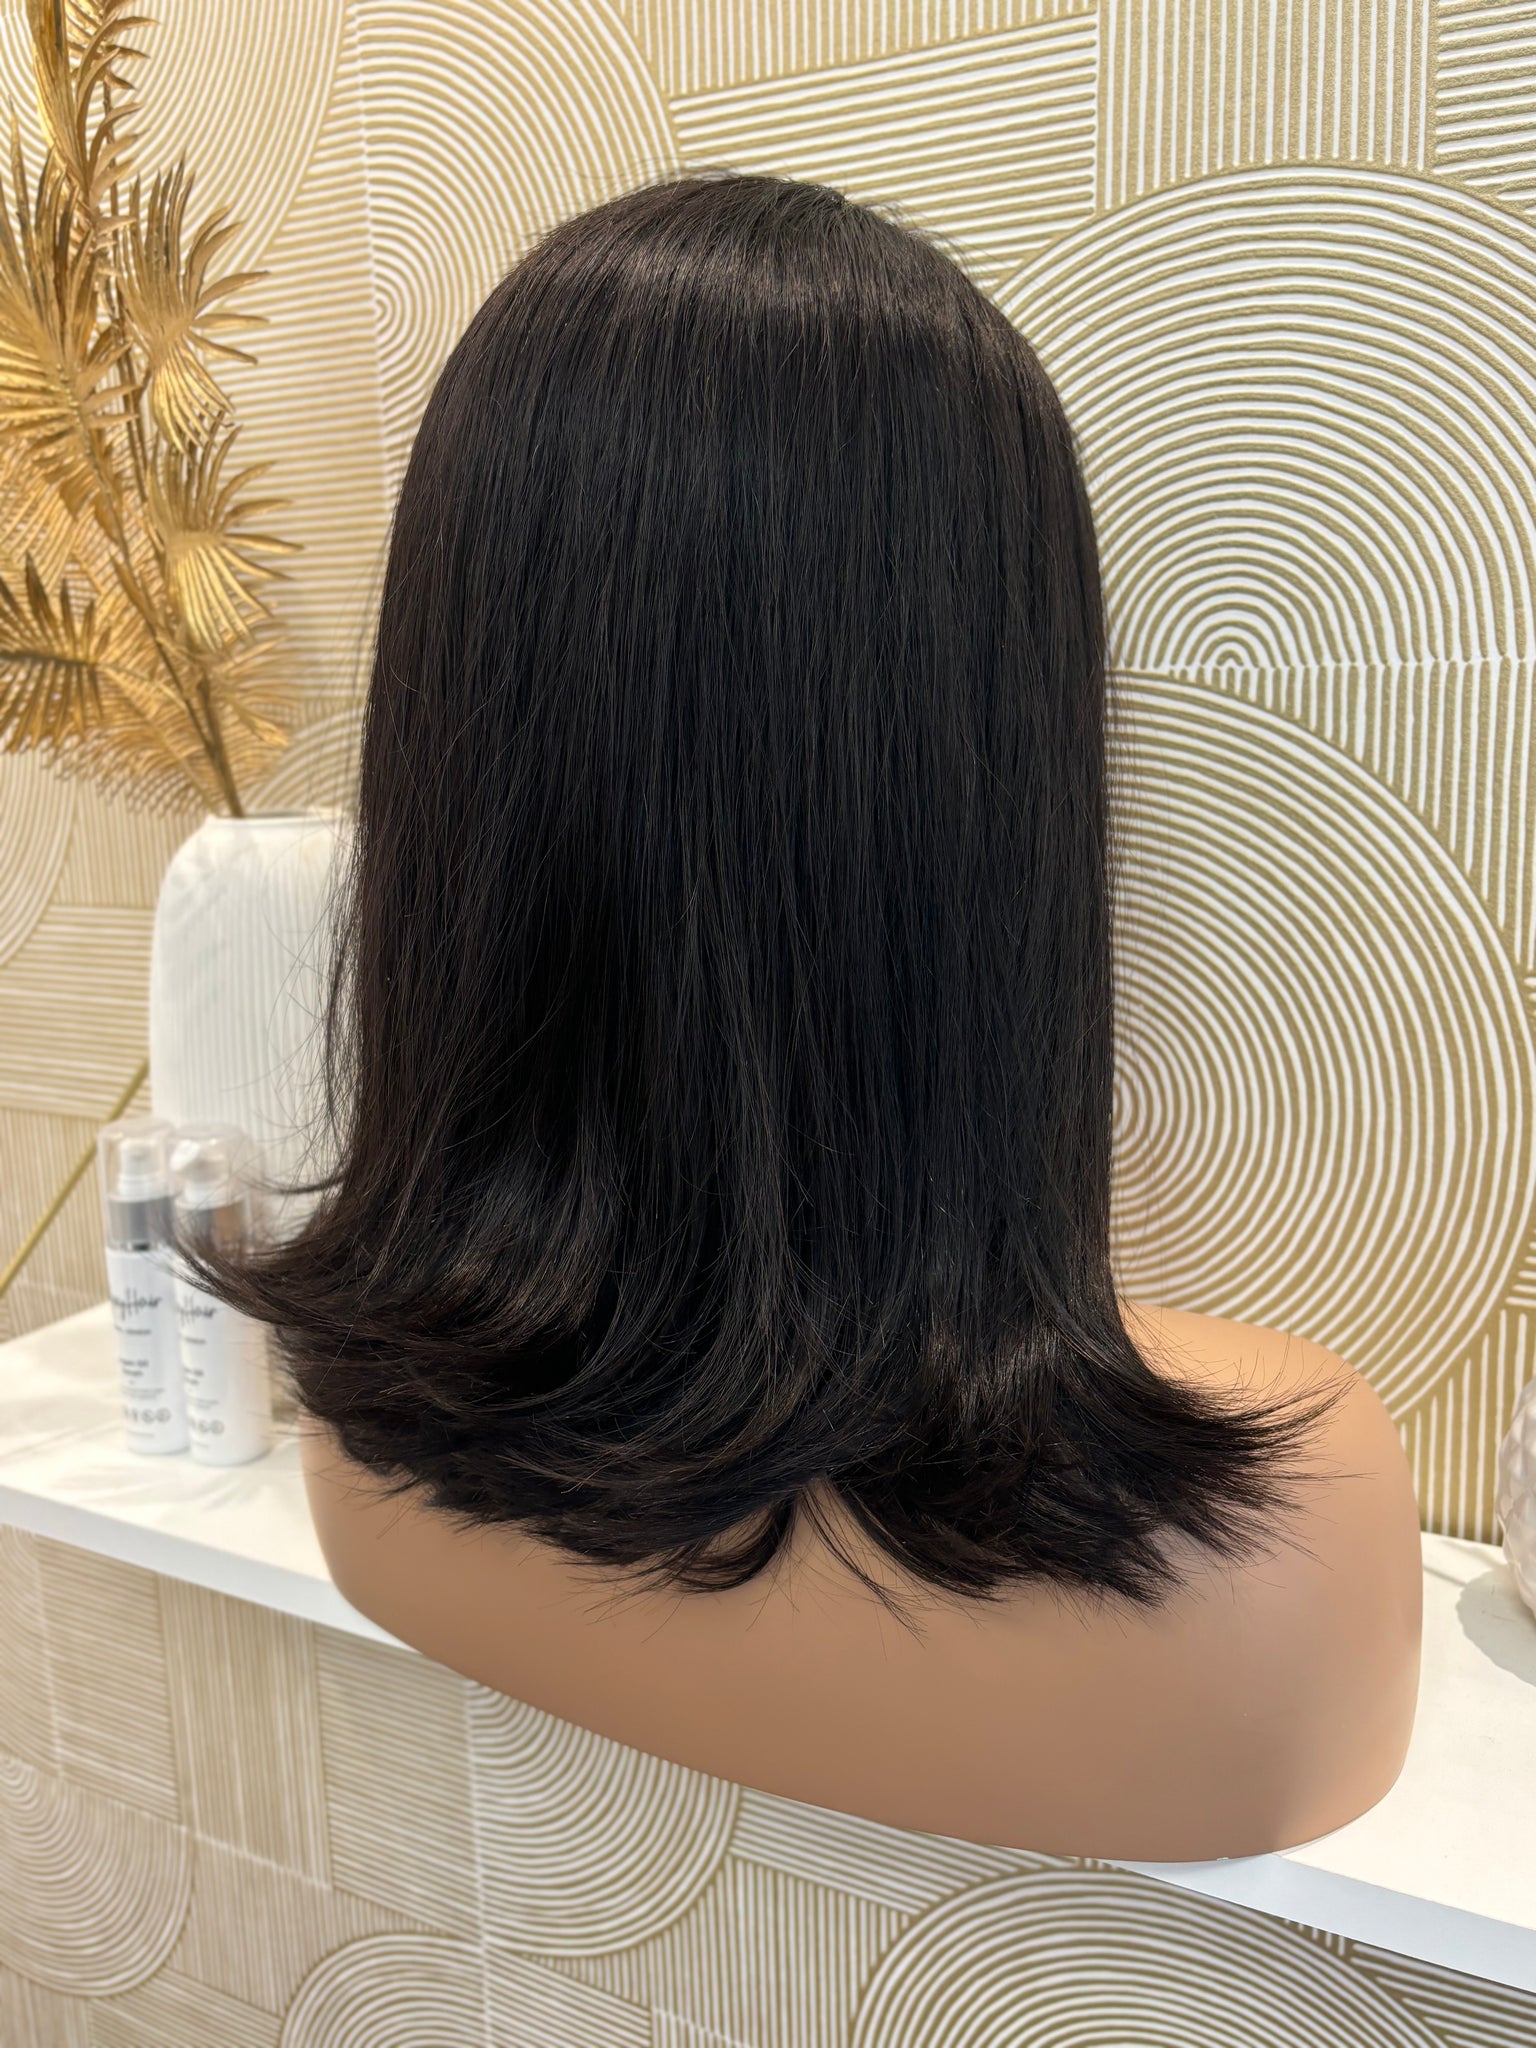 Lana - Integral + lace top  / 16 inch / 150 % Volume / burmese hair